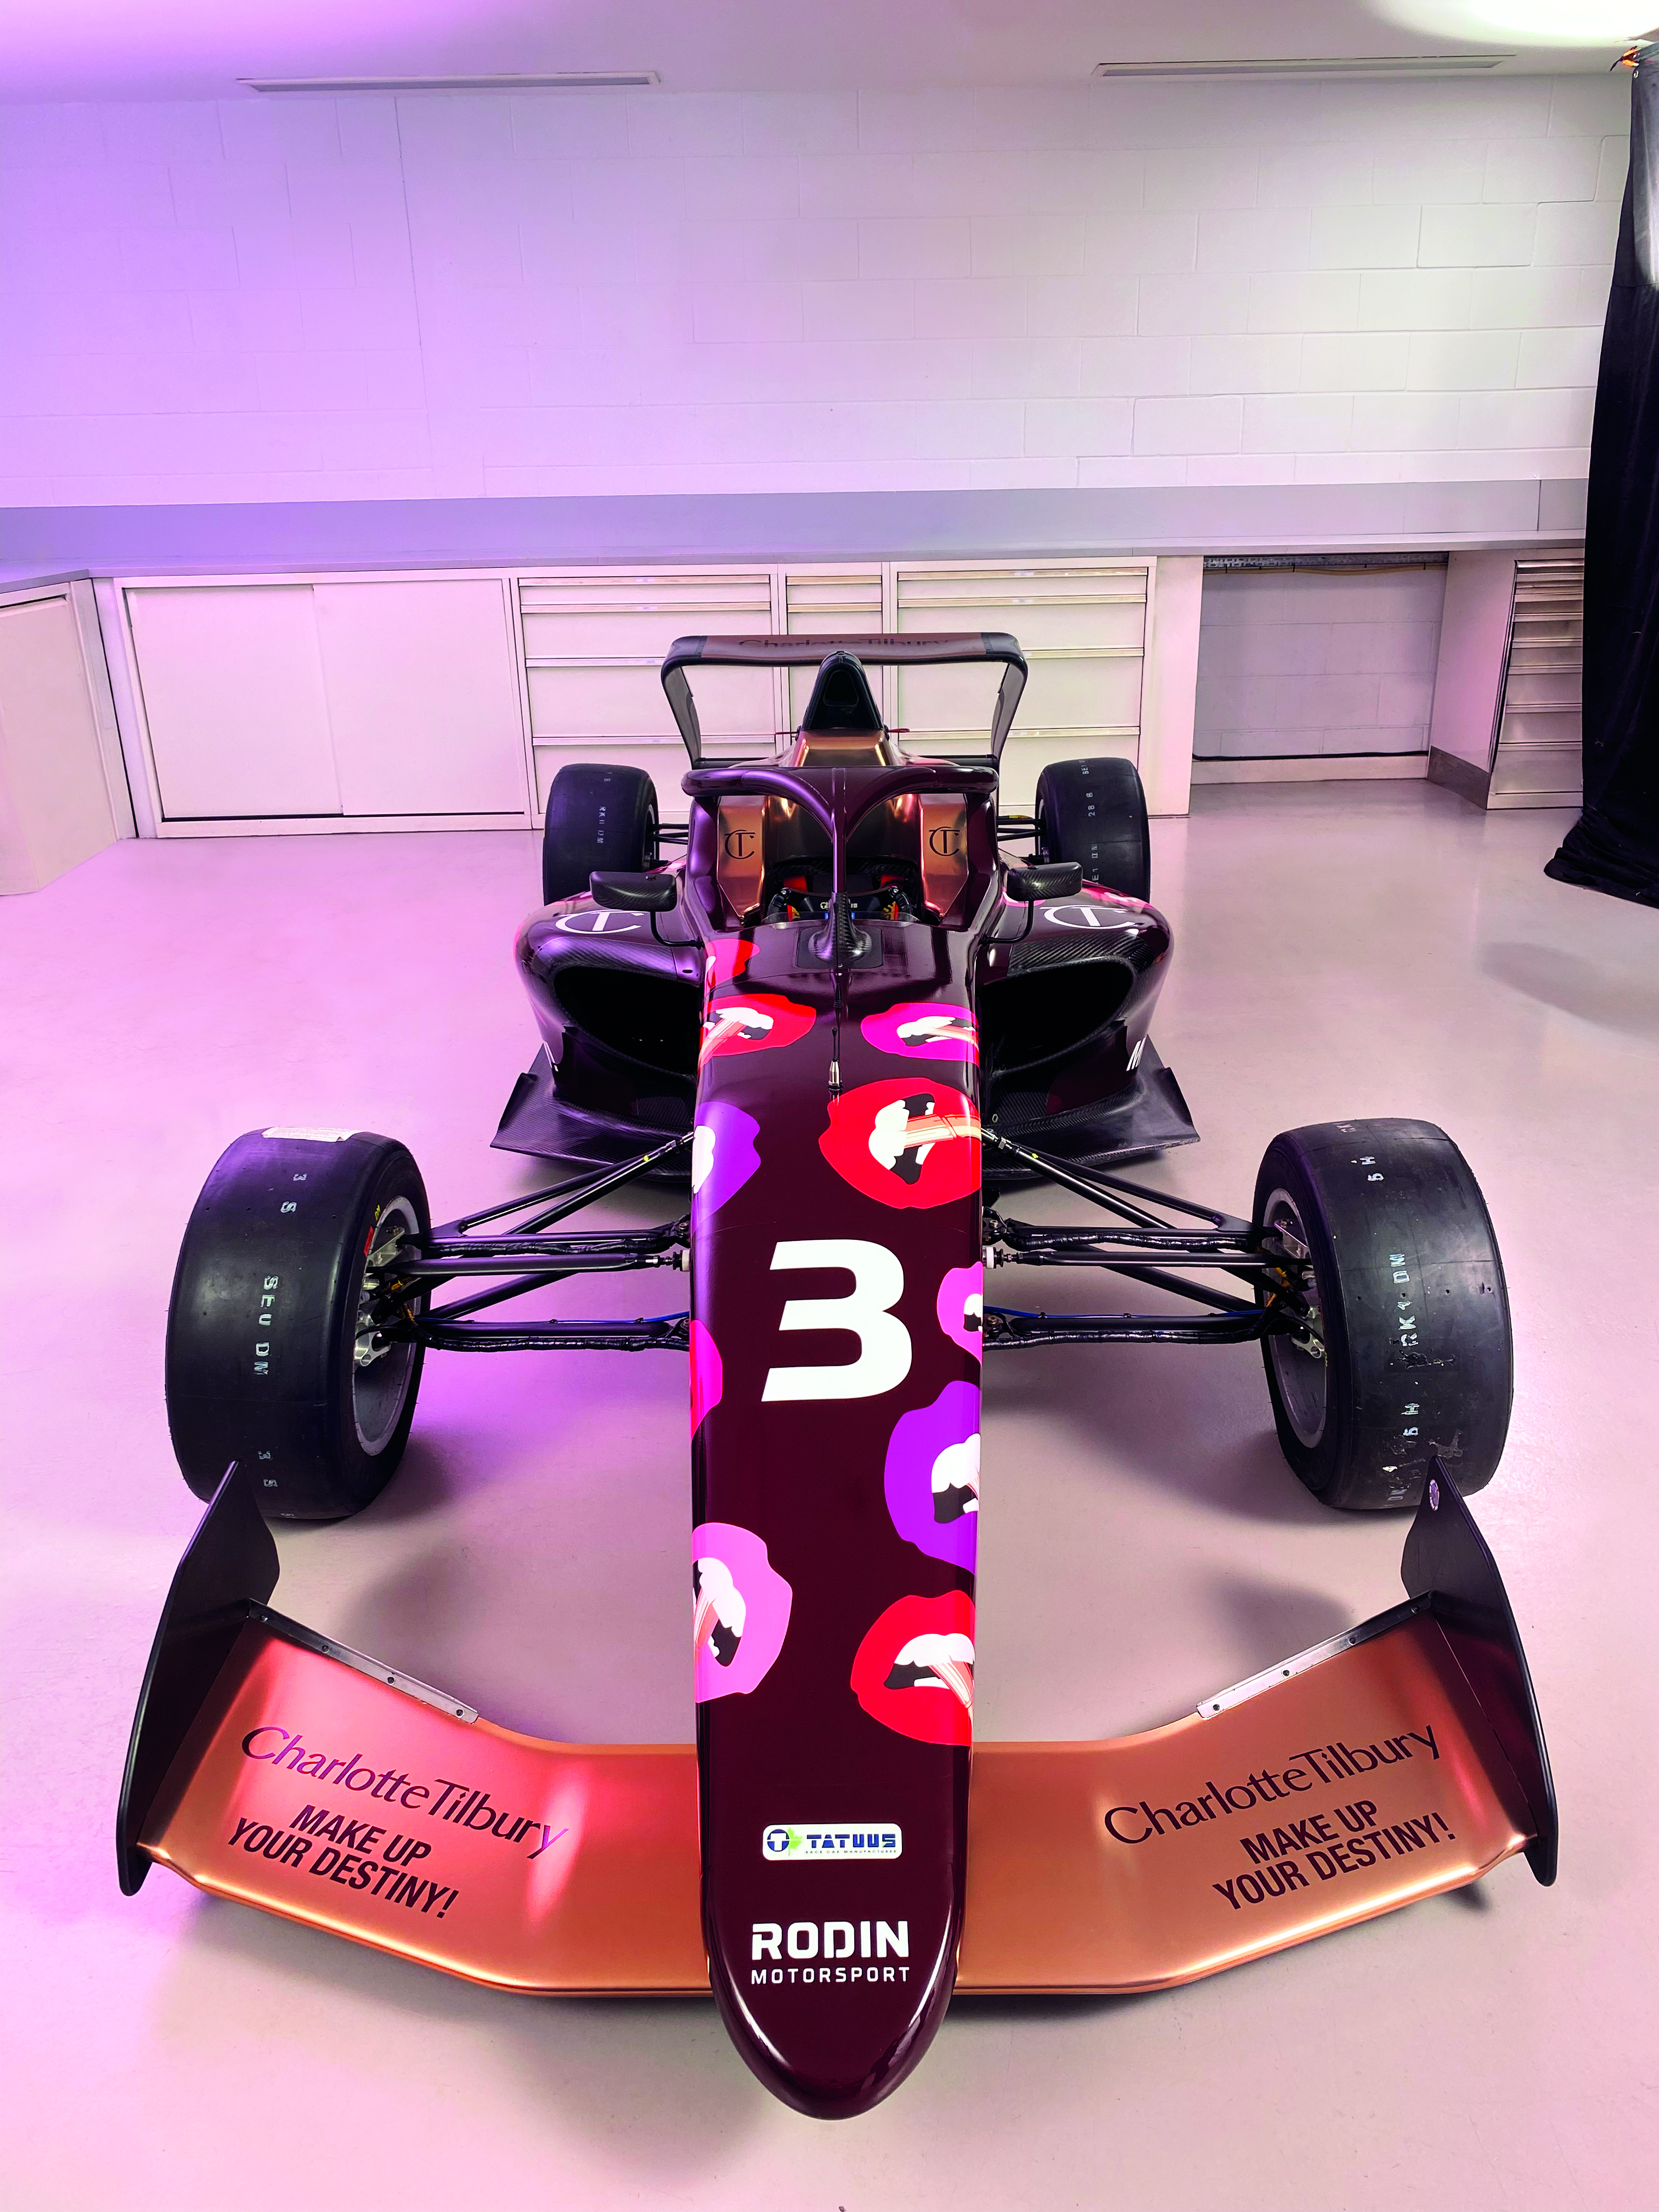 Charlotte Tilbury Formula 1 Academy Car Front